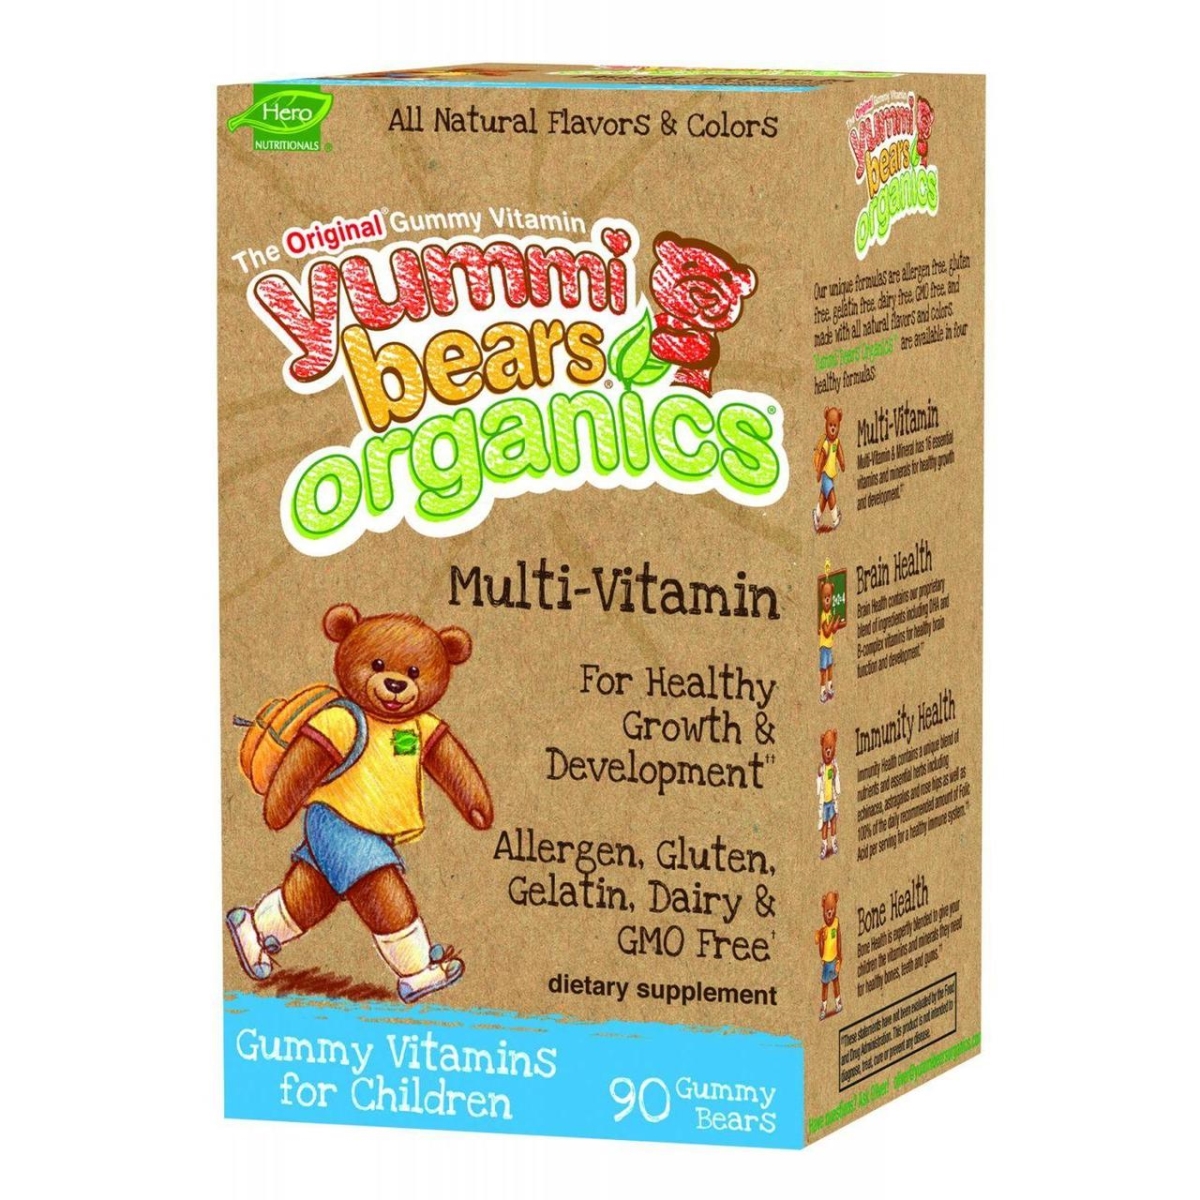 Yummy Earth Hg0822668 Bears Organics Multi Vitaminand Mineral Gummy, Children - 90 Count